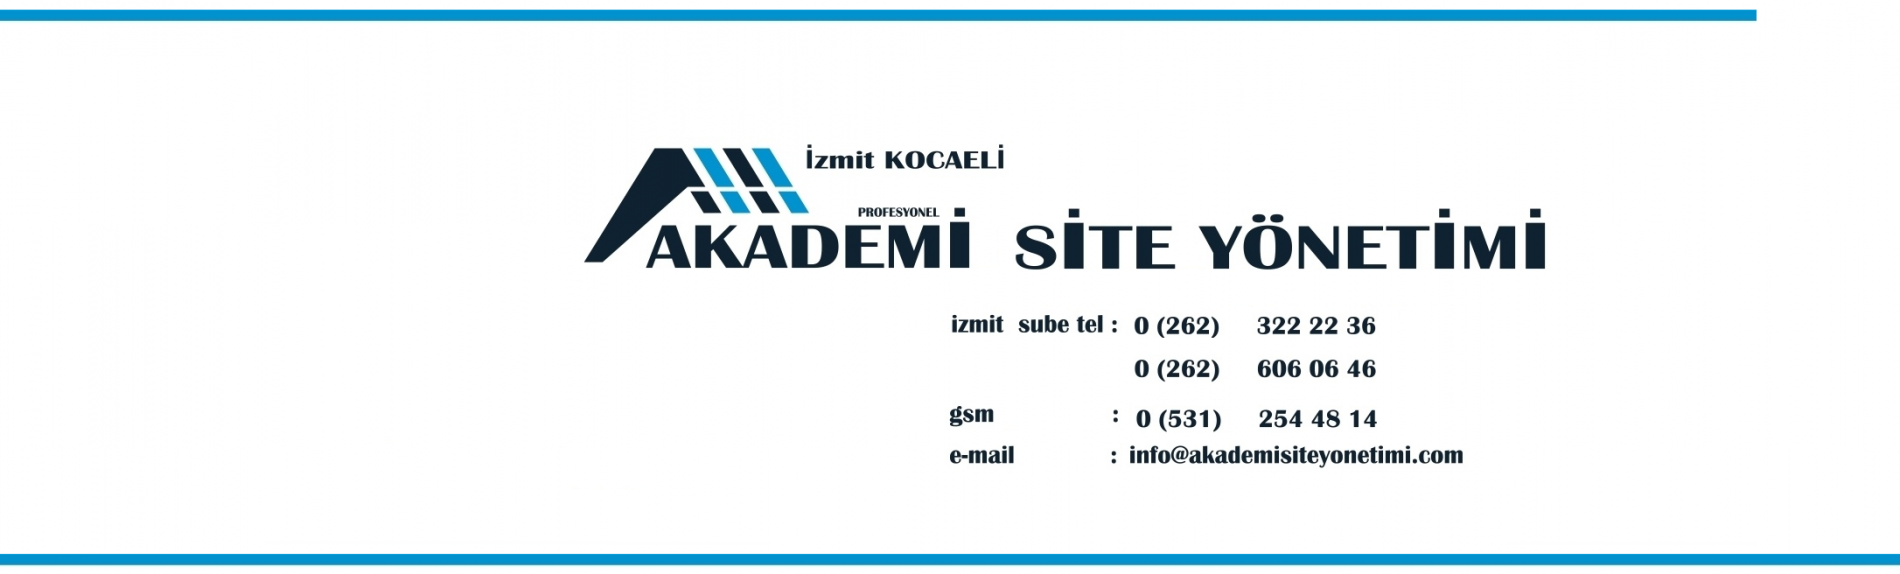 Akademi Profesyonel Site Yonetimi, İzmit Site Yonetimi, Kocaeli Site Yonetimi